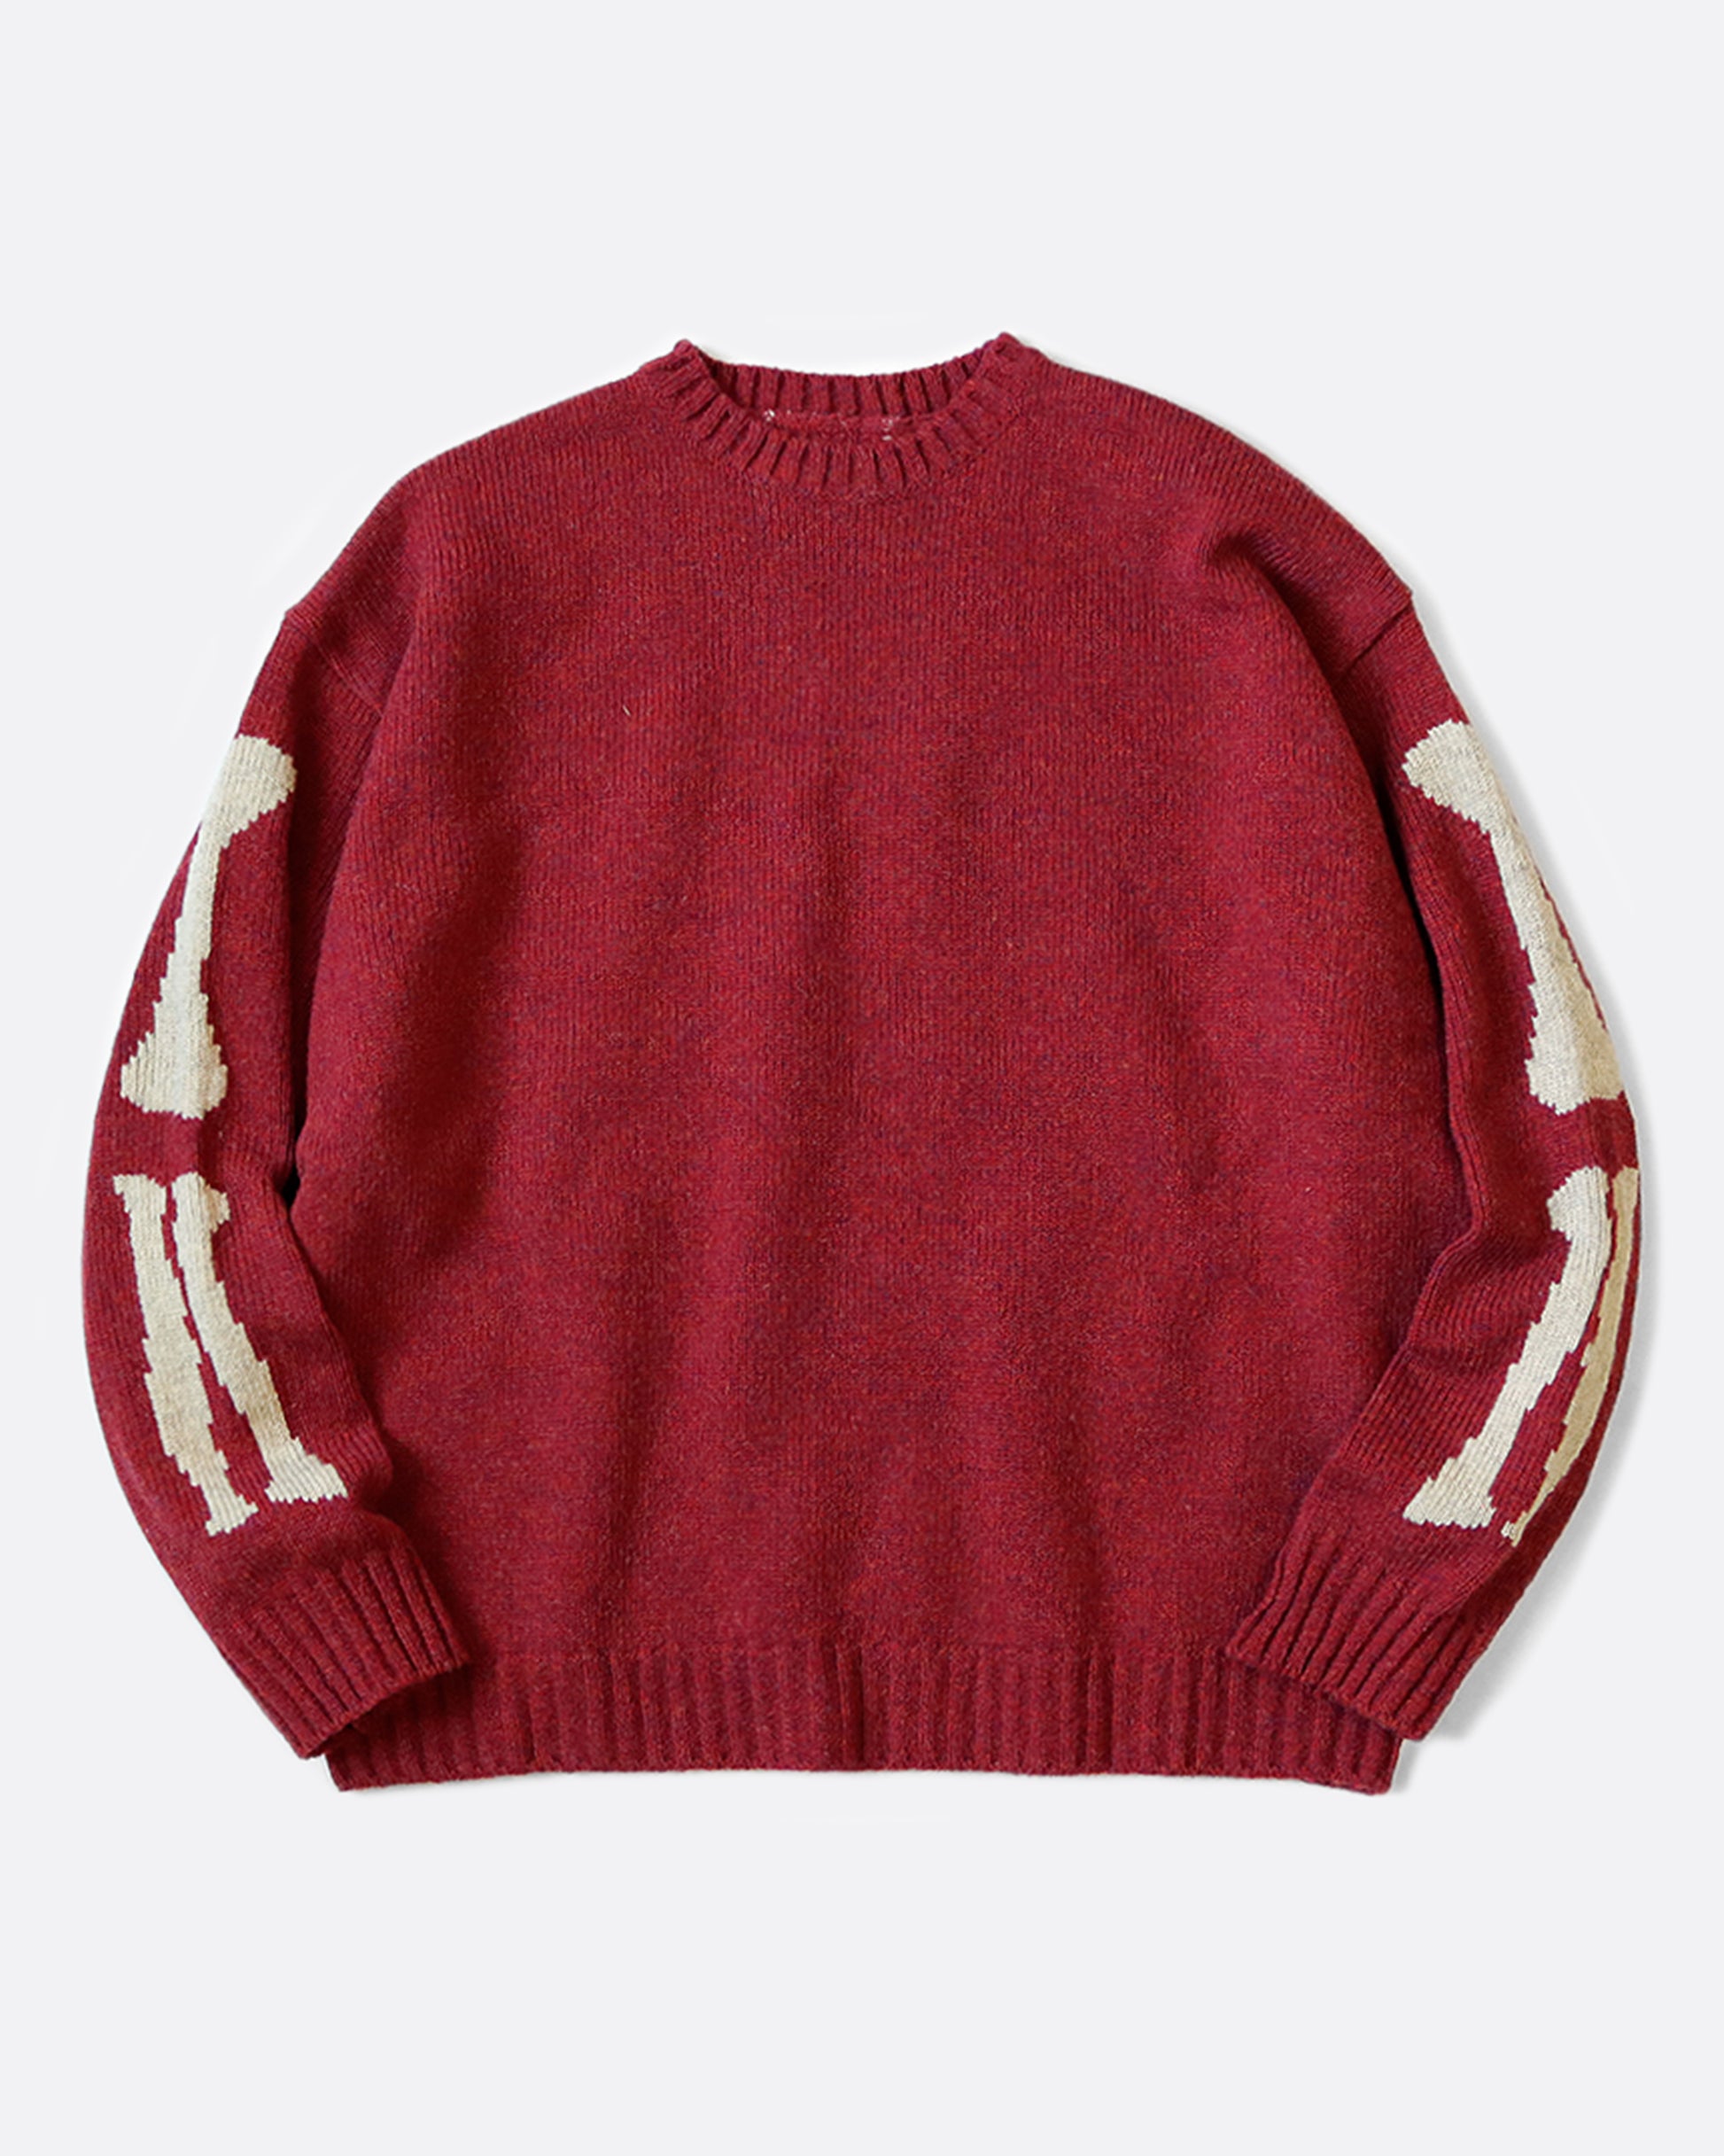 A 5g knit crewneck sweater with Kapital's signature skeletal design.